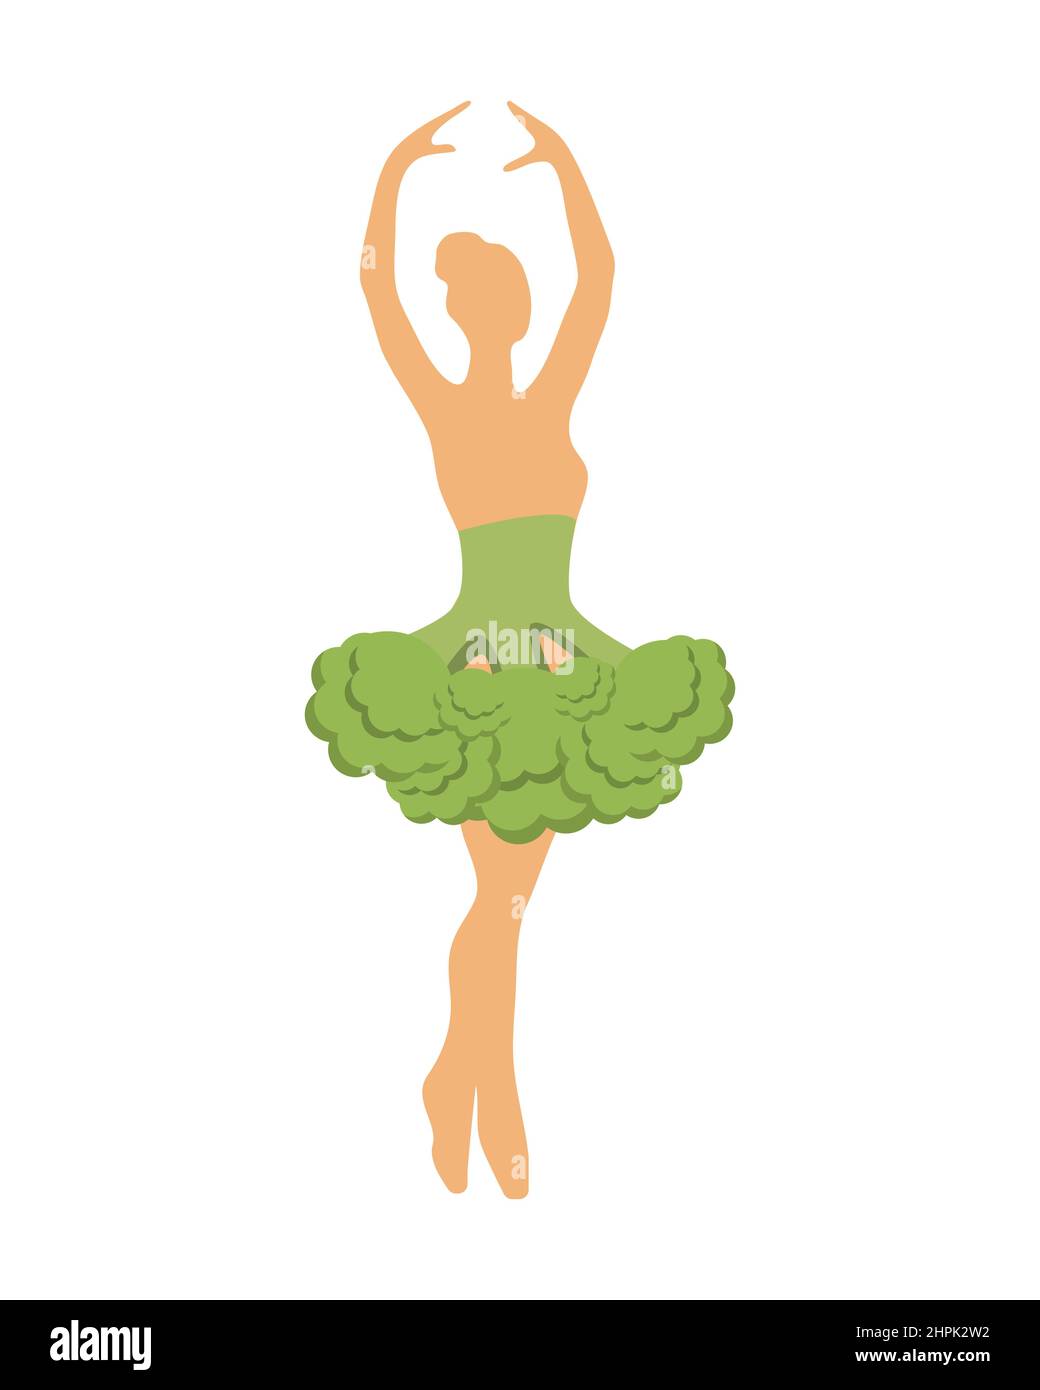 Girl ballerina and broccoli, healthy eating, slimness, vegetarianism. Vector illustration Stock Vector